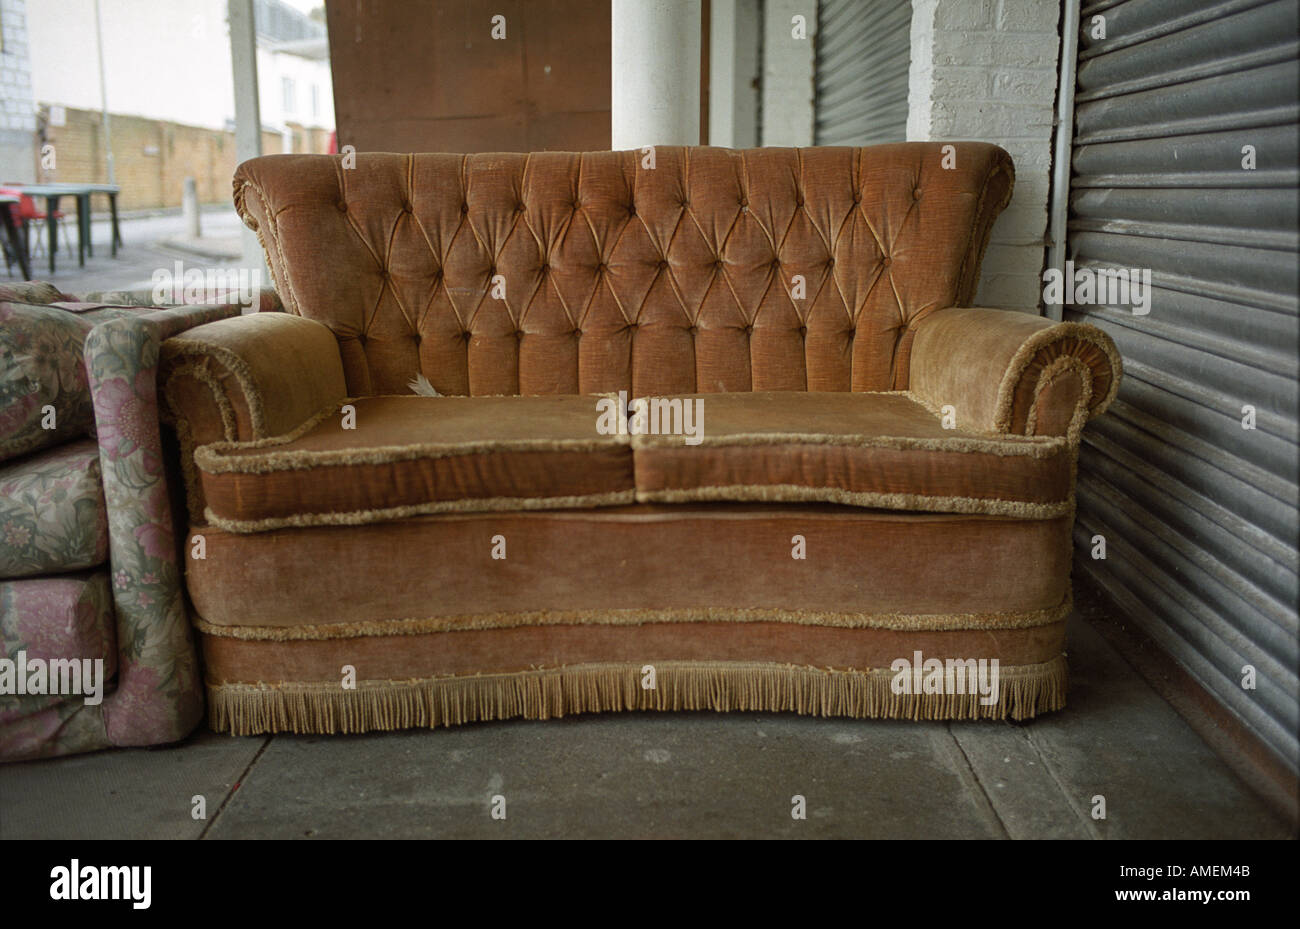 abandoned sofa Stock Photo